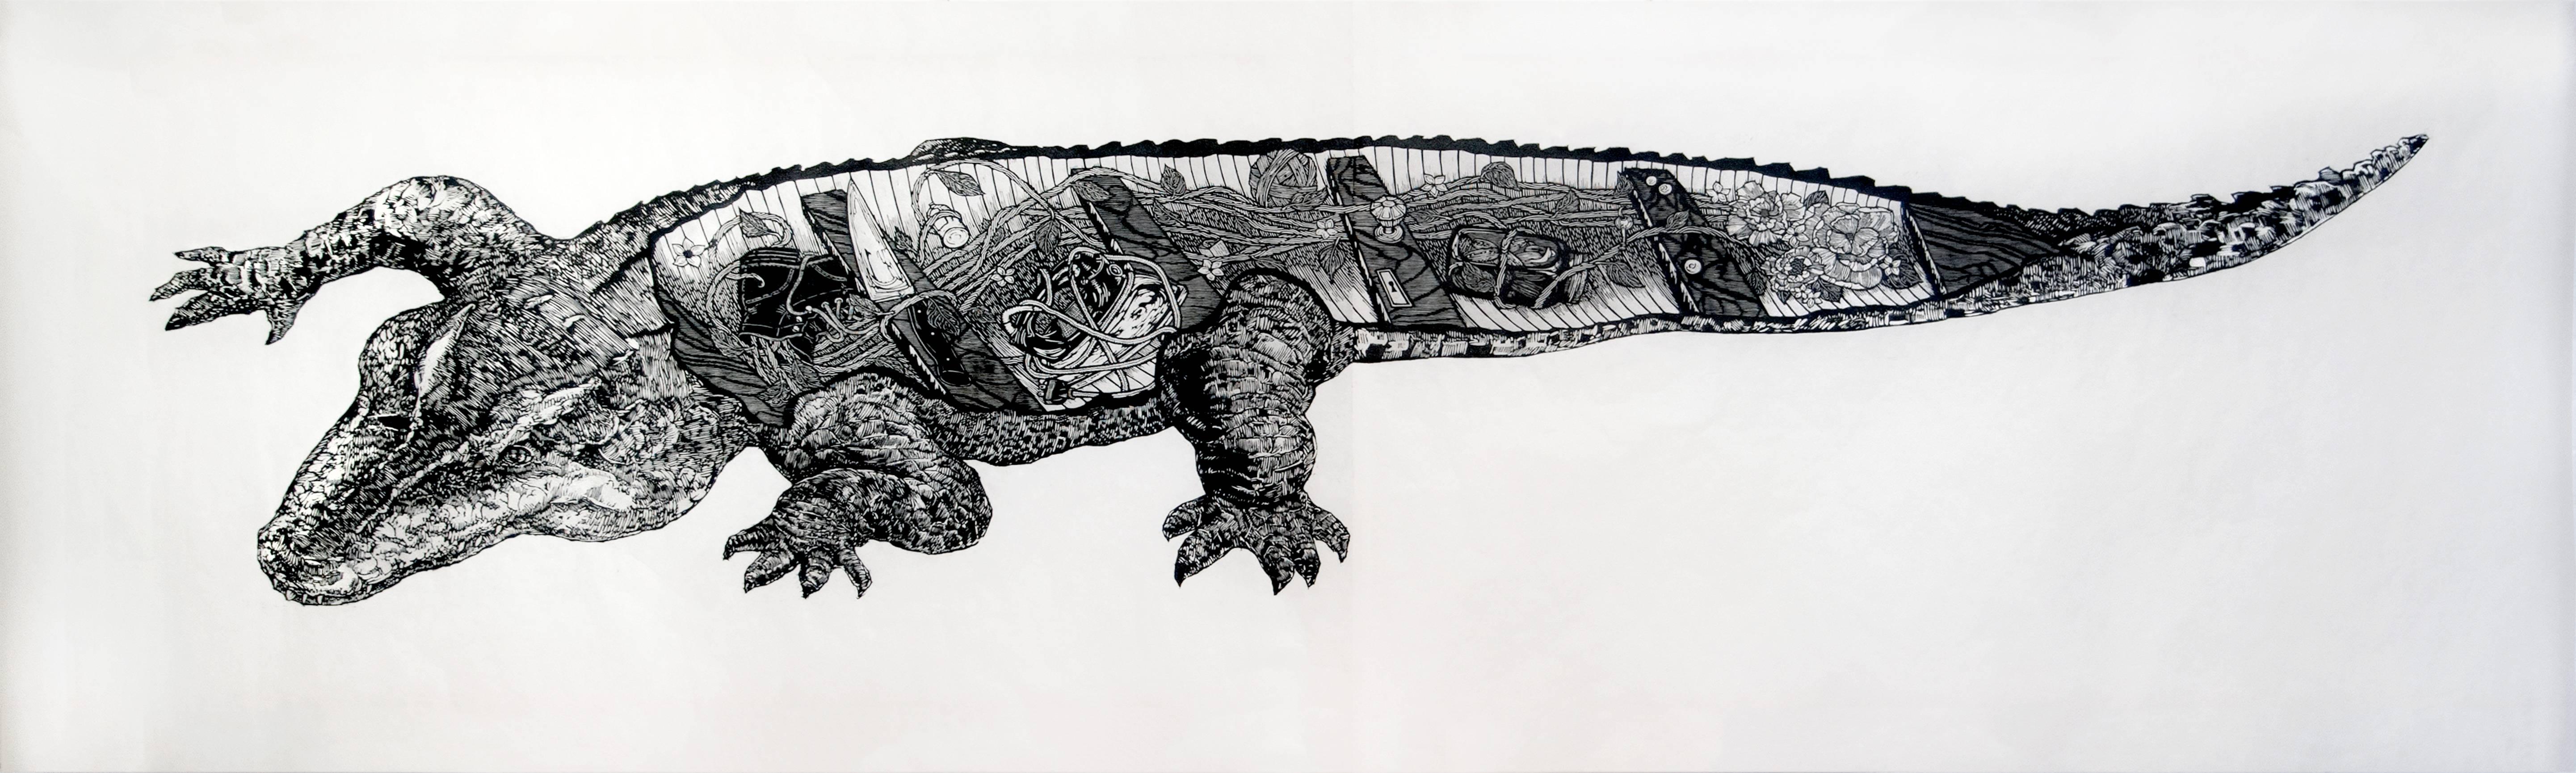 We the Beast Animal Print - Alligator Canoe 